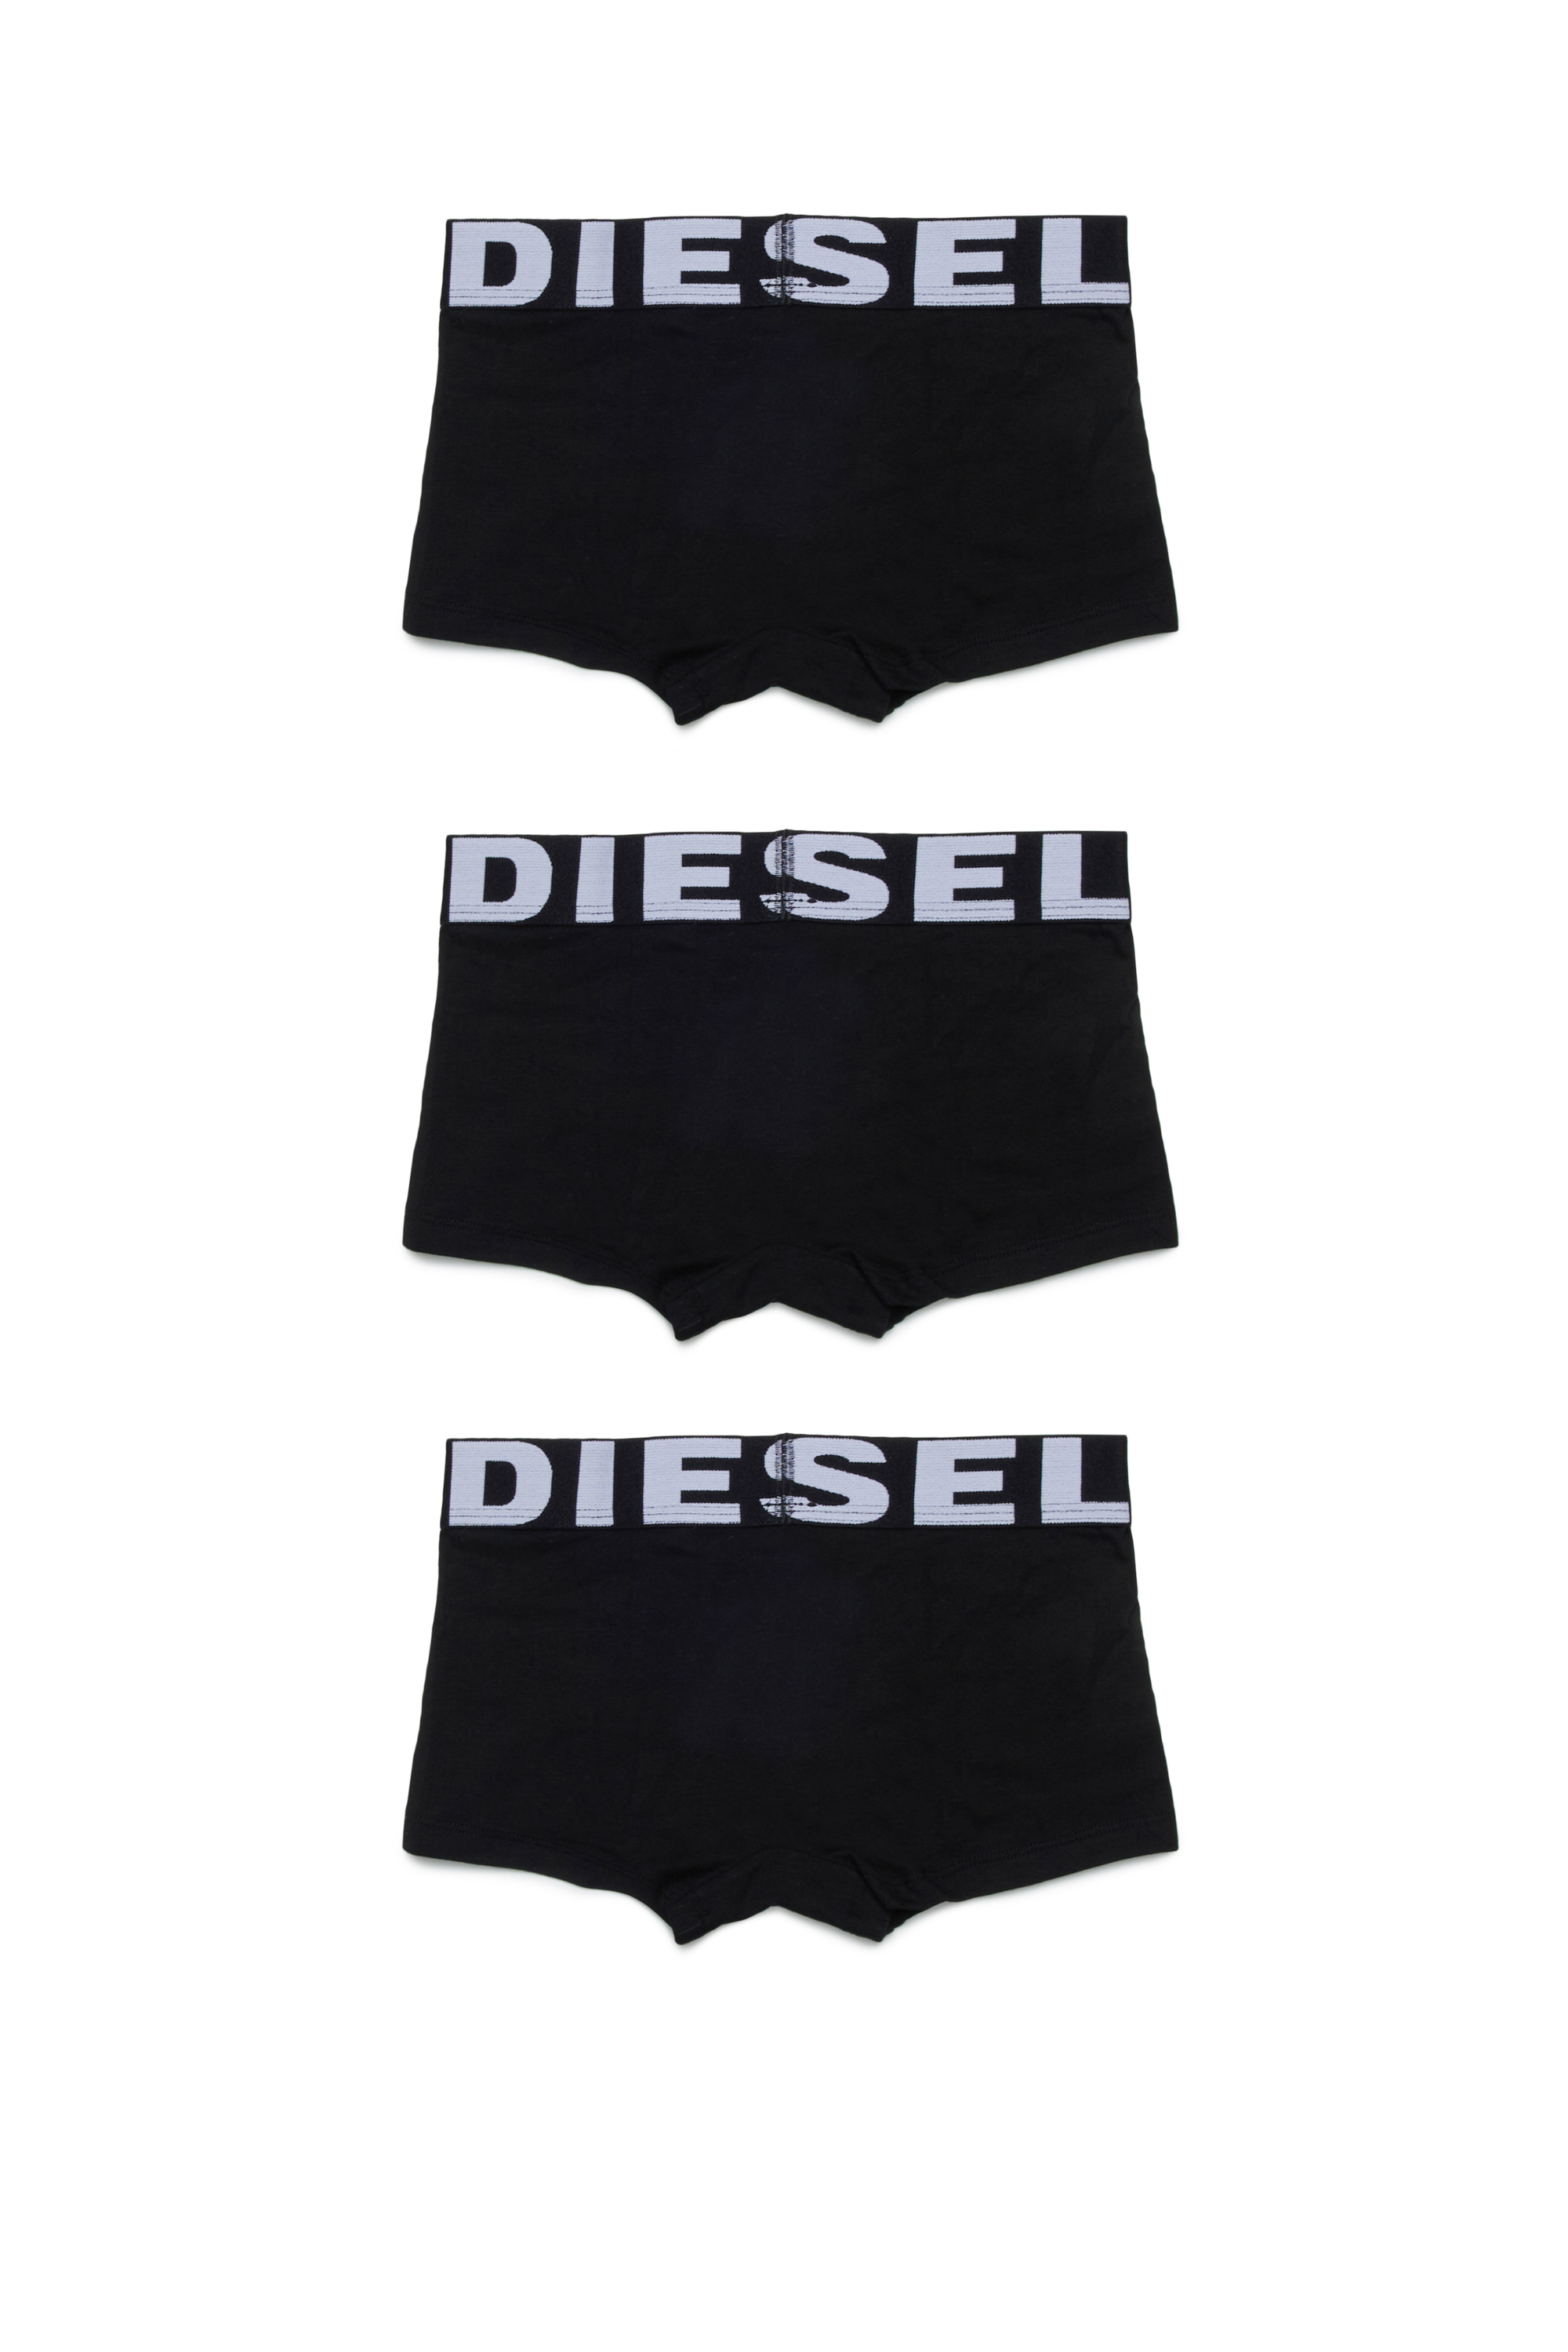 Diesel - UMBX-UPARRYTHREEPACK-DSL, Black - Image 2